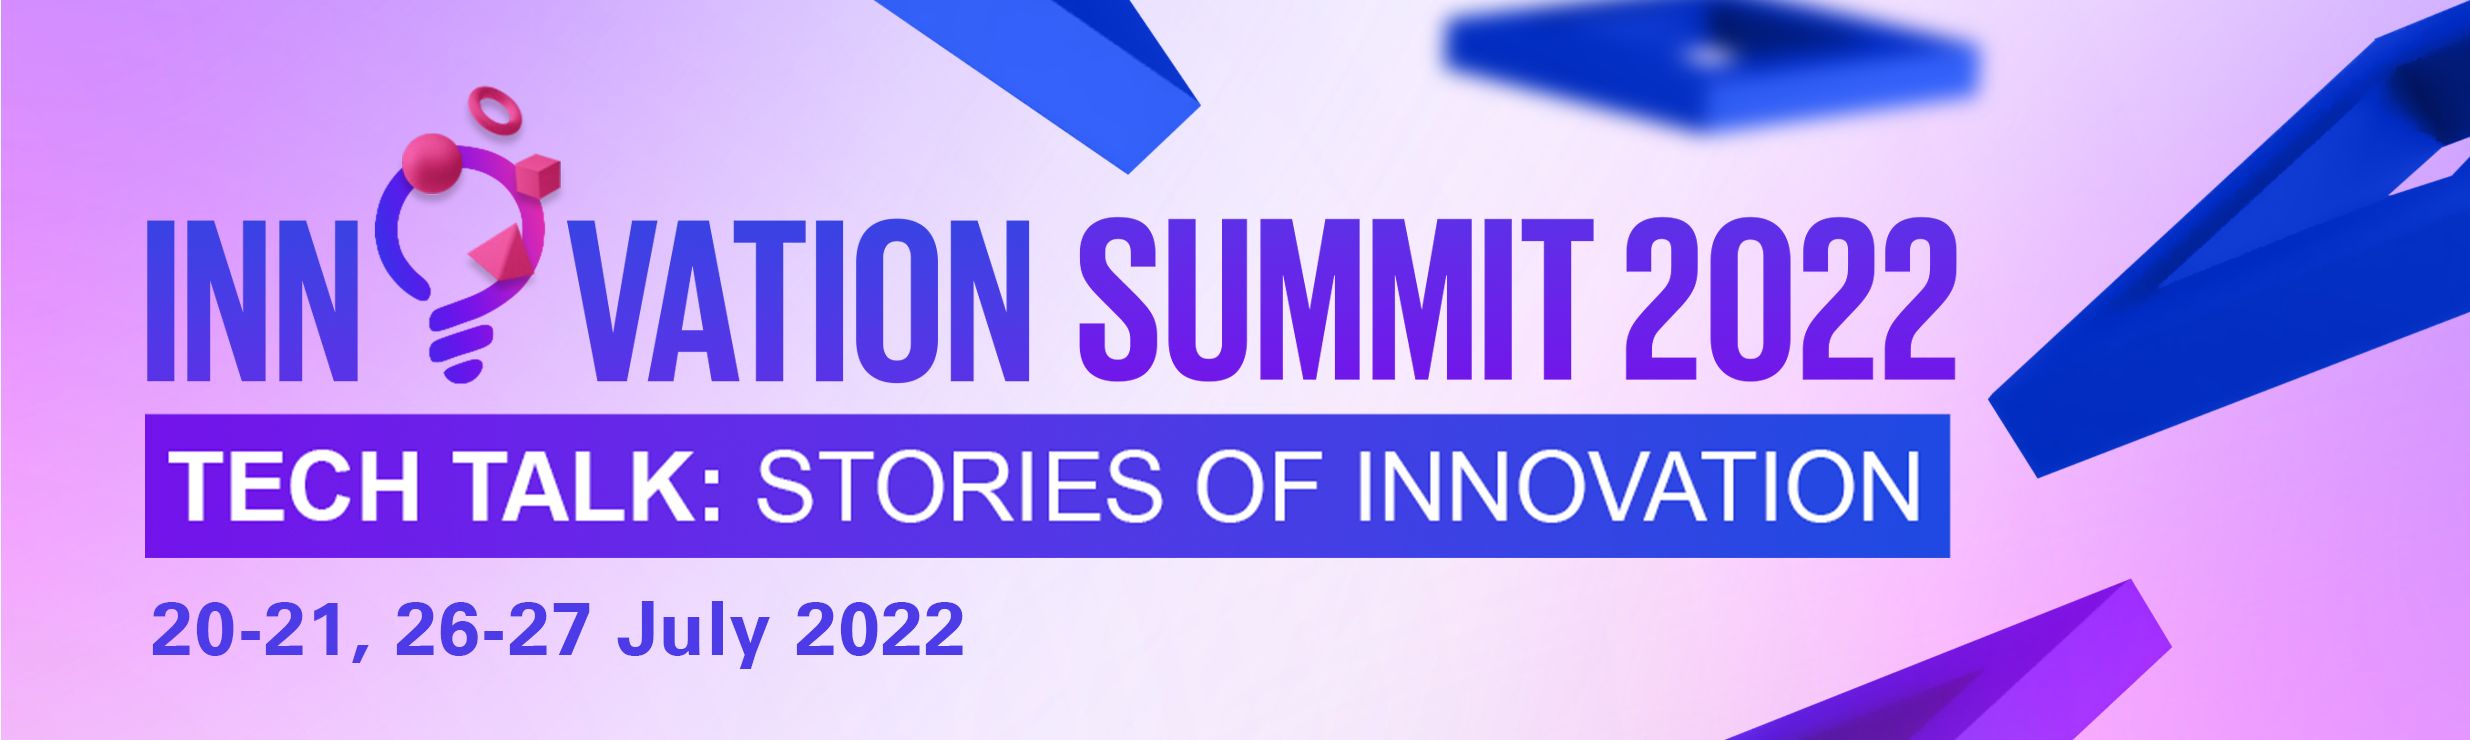 innovation summit 2022